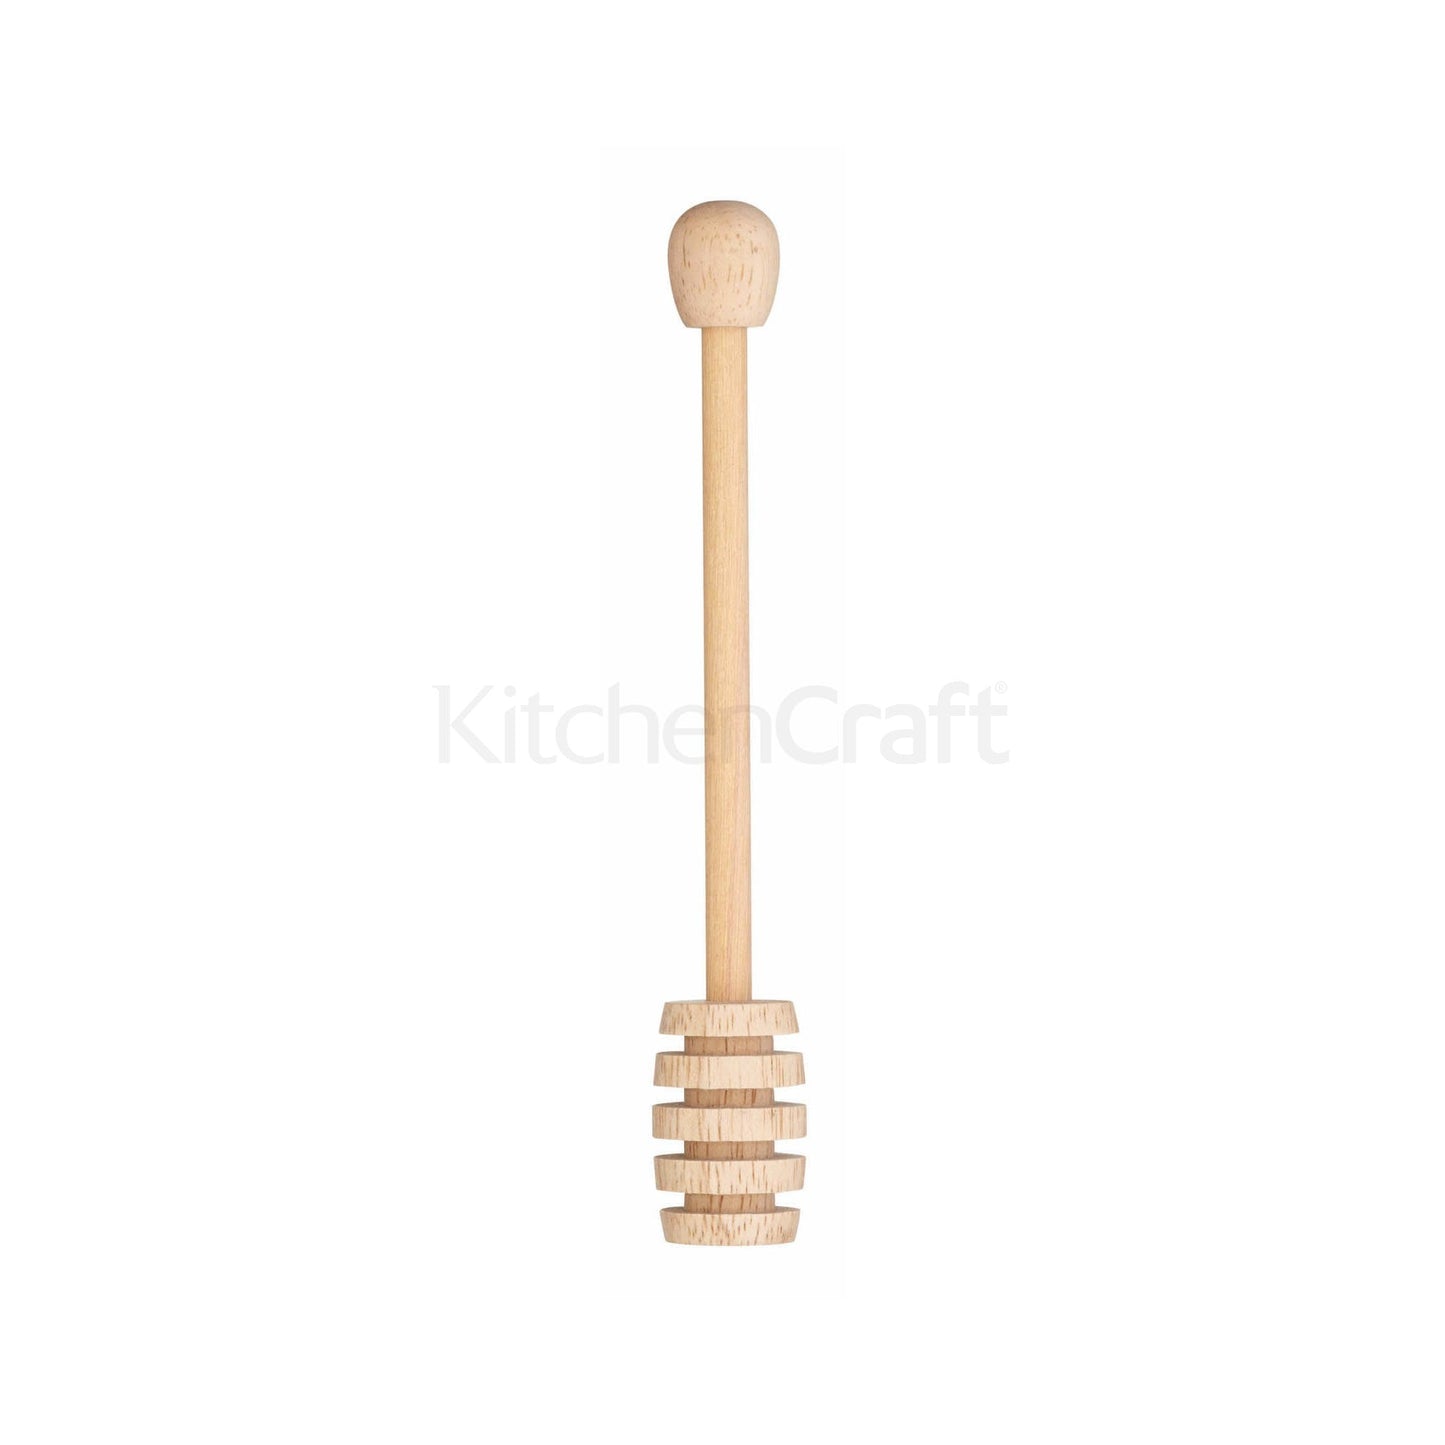 KitchenCraft Wooden Honey Dipper KCDIP - Home & Beyond